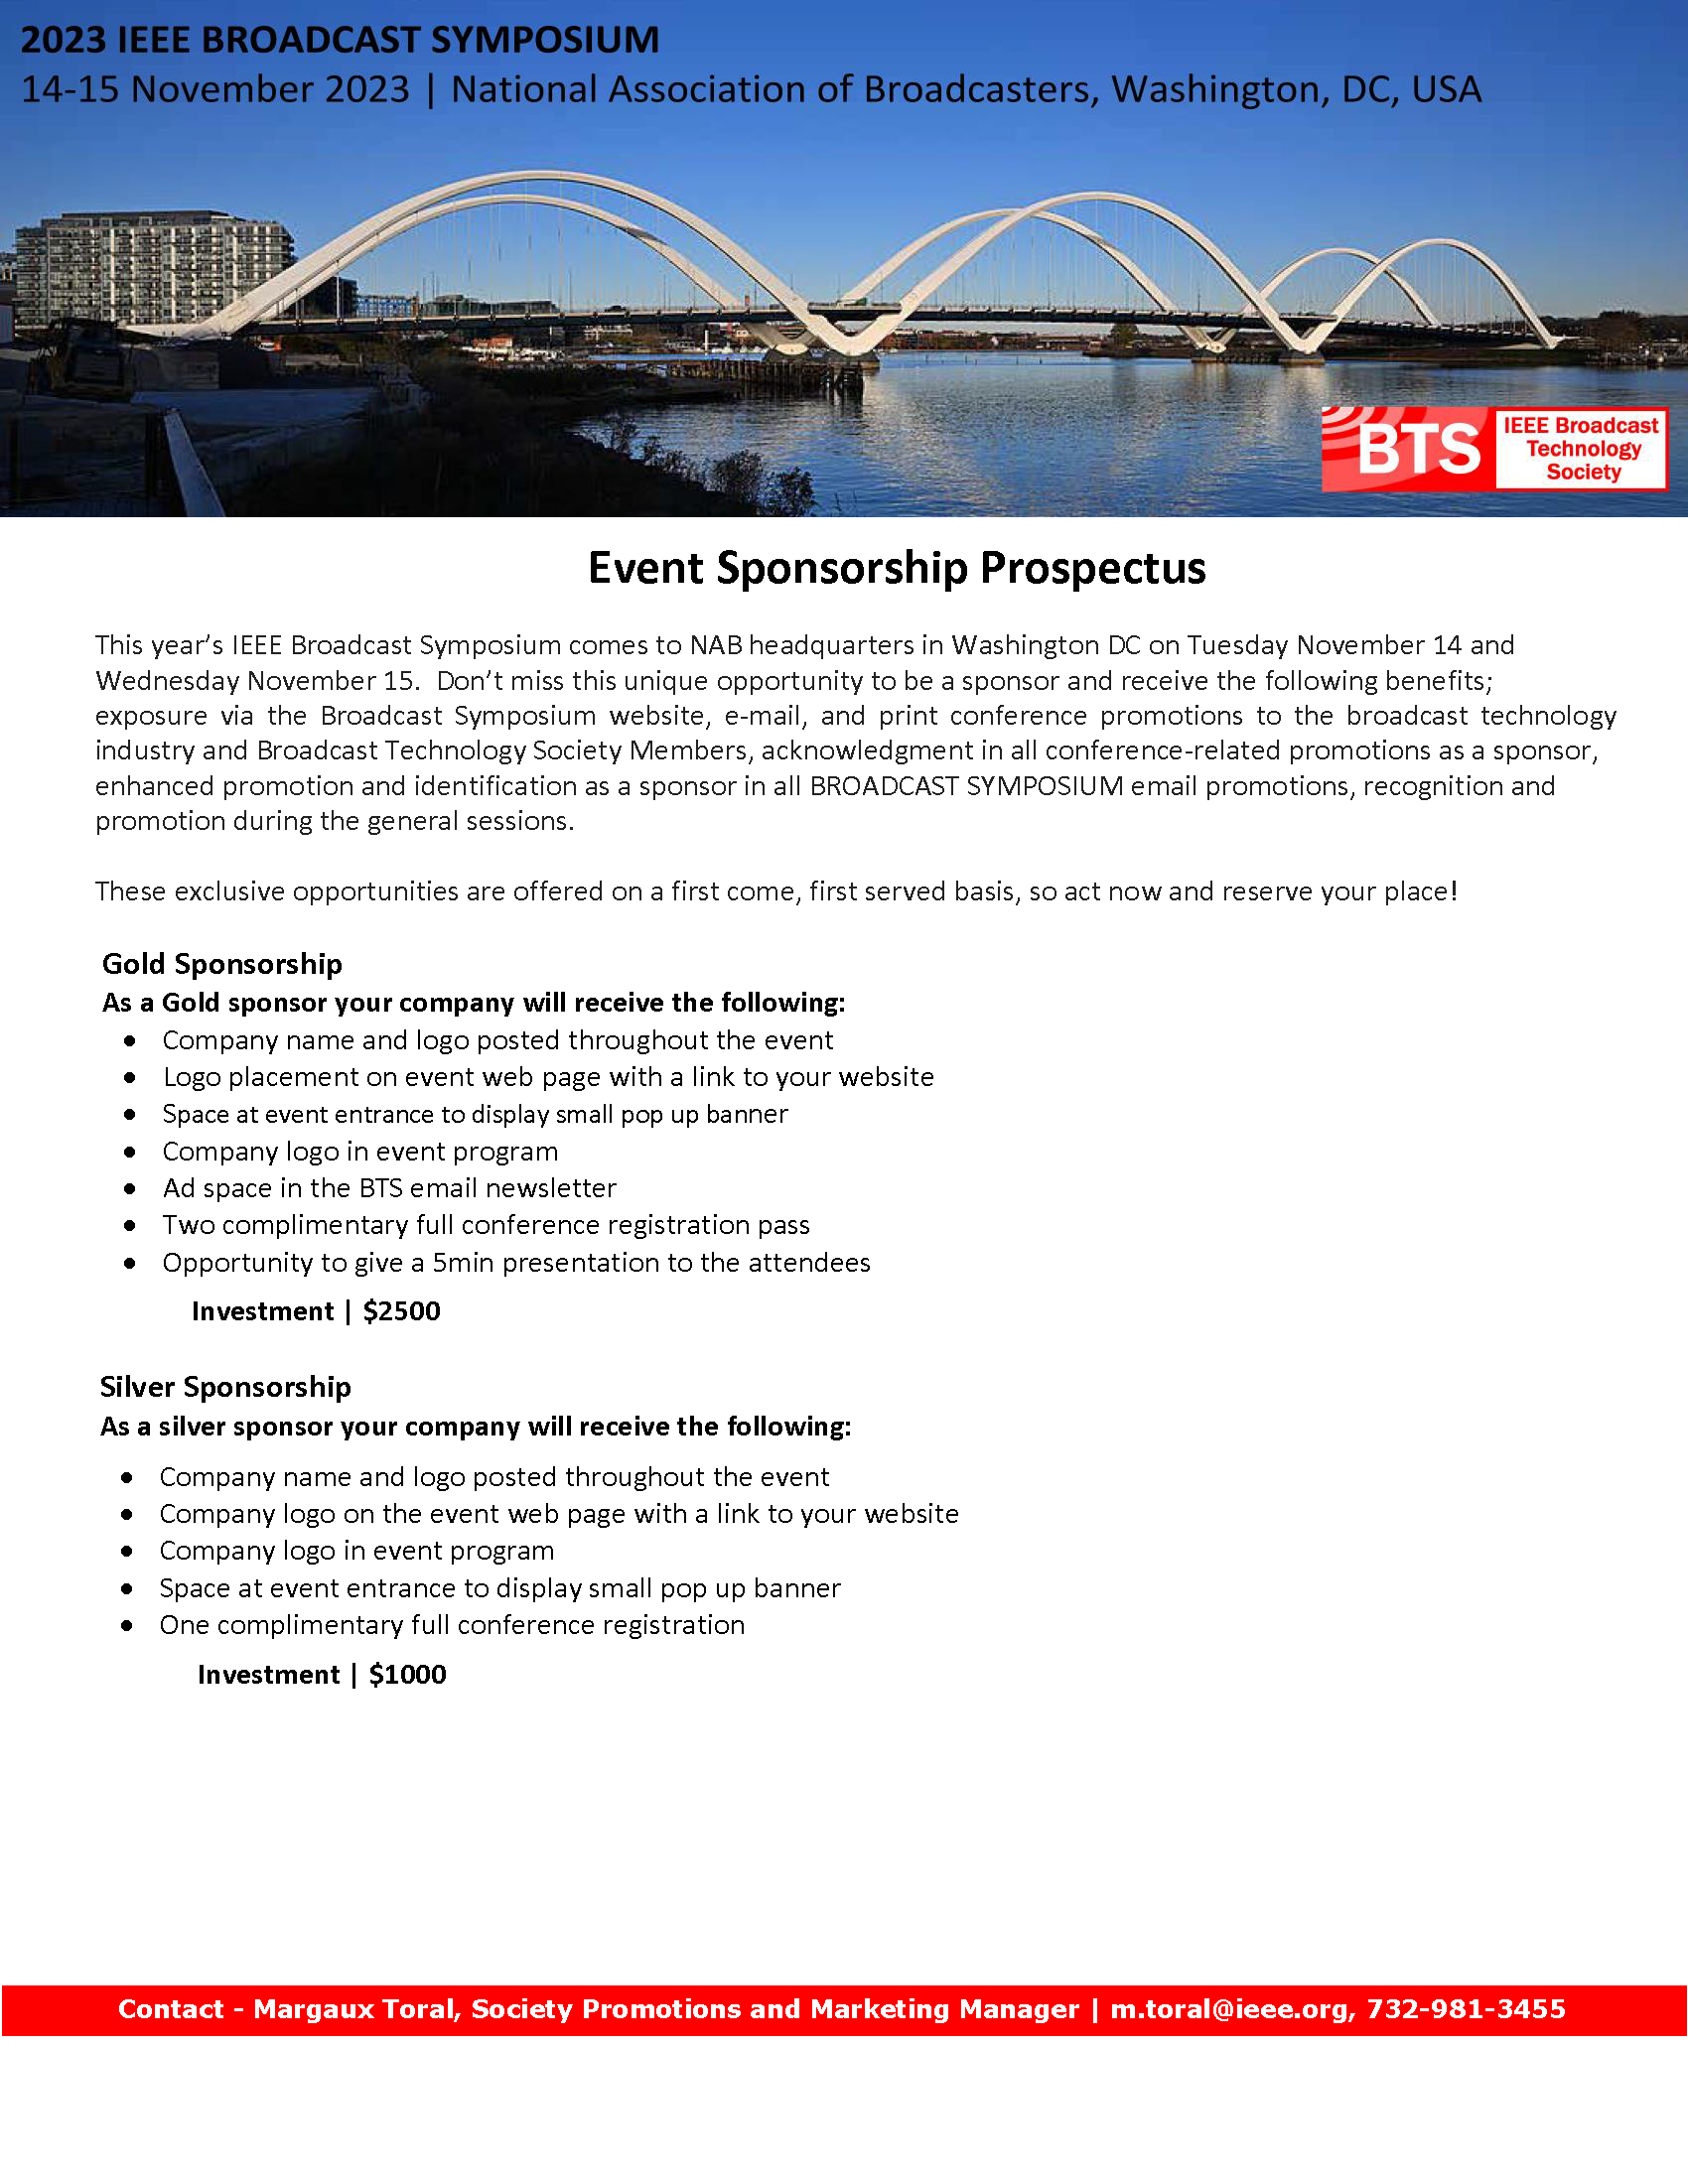 2023 Broadcast Symposium Sponsorship Prospectus1